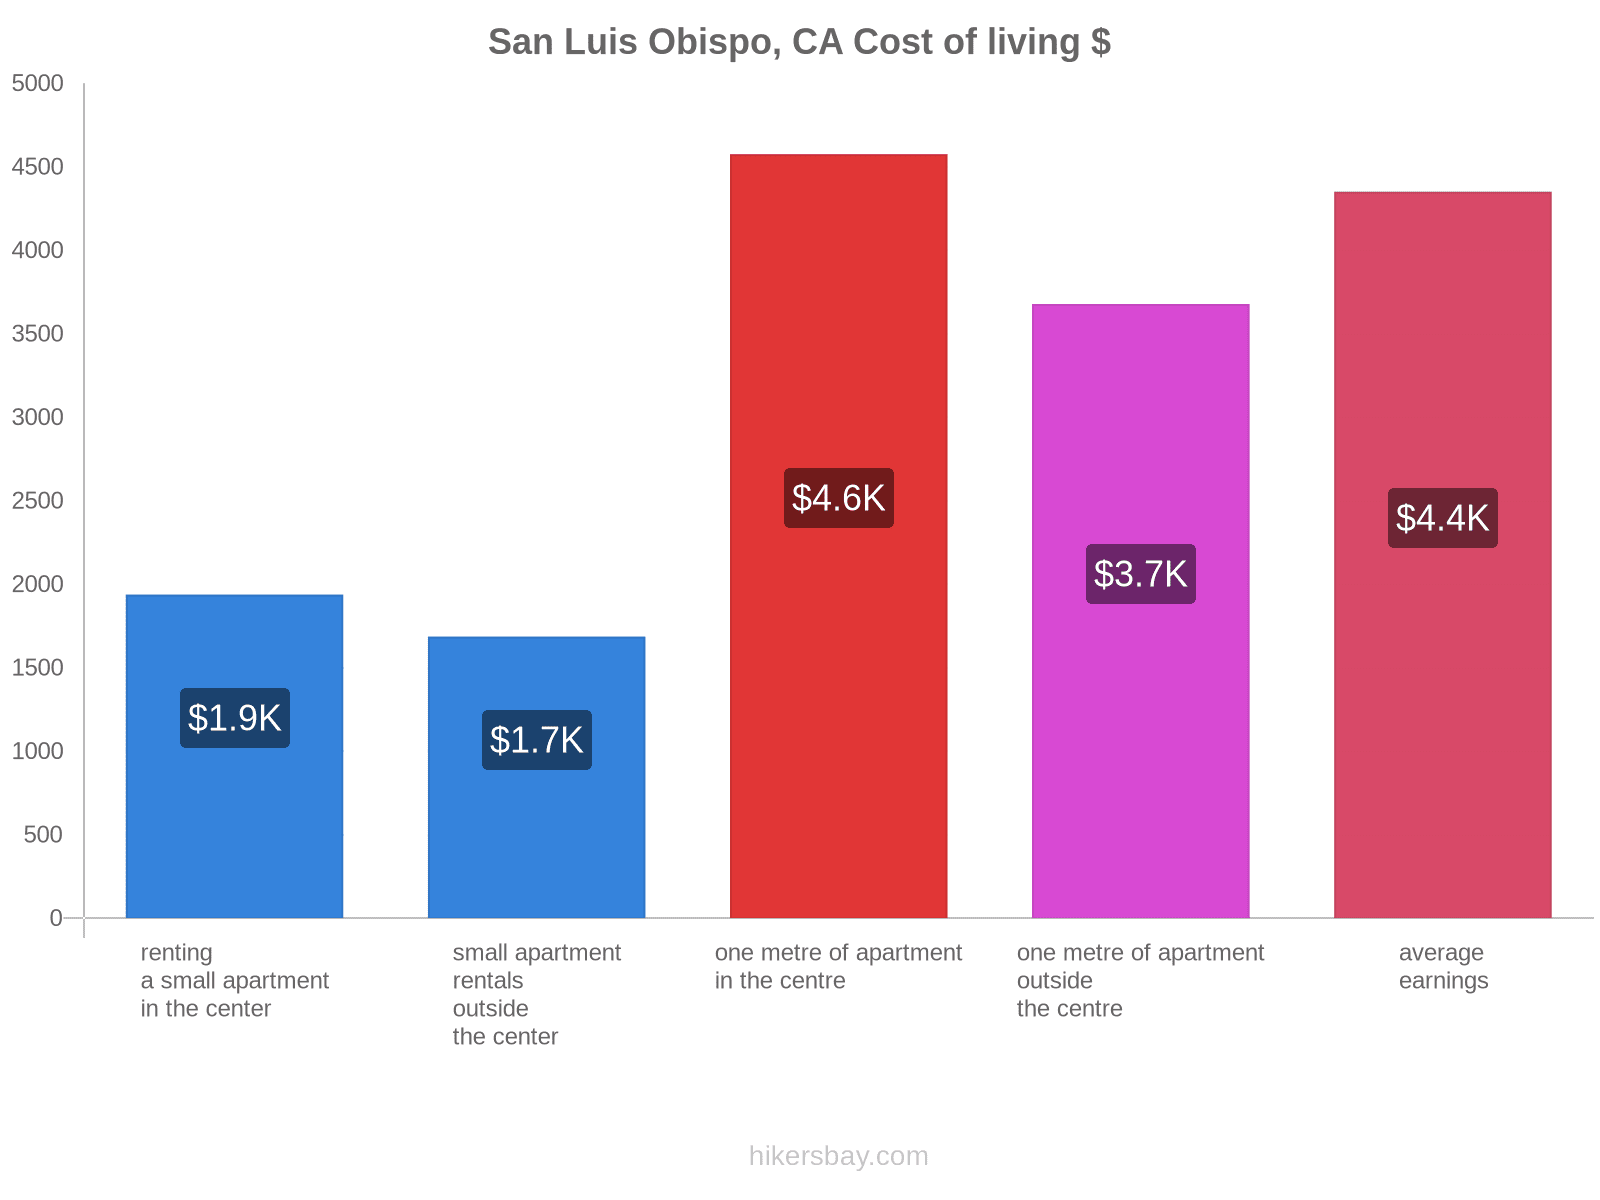 San Luis Obispo, CA cost of living hikersbay.com